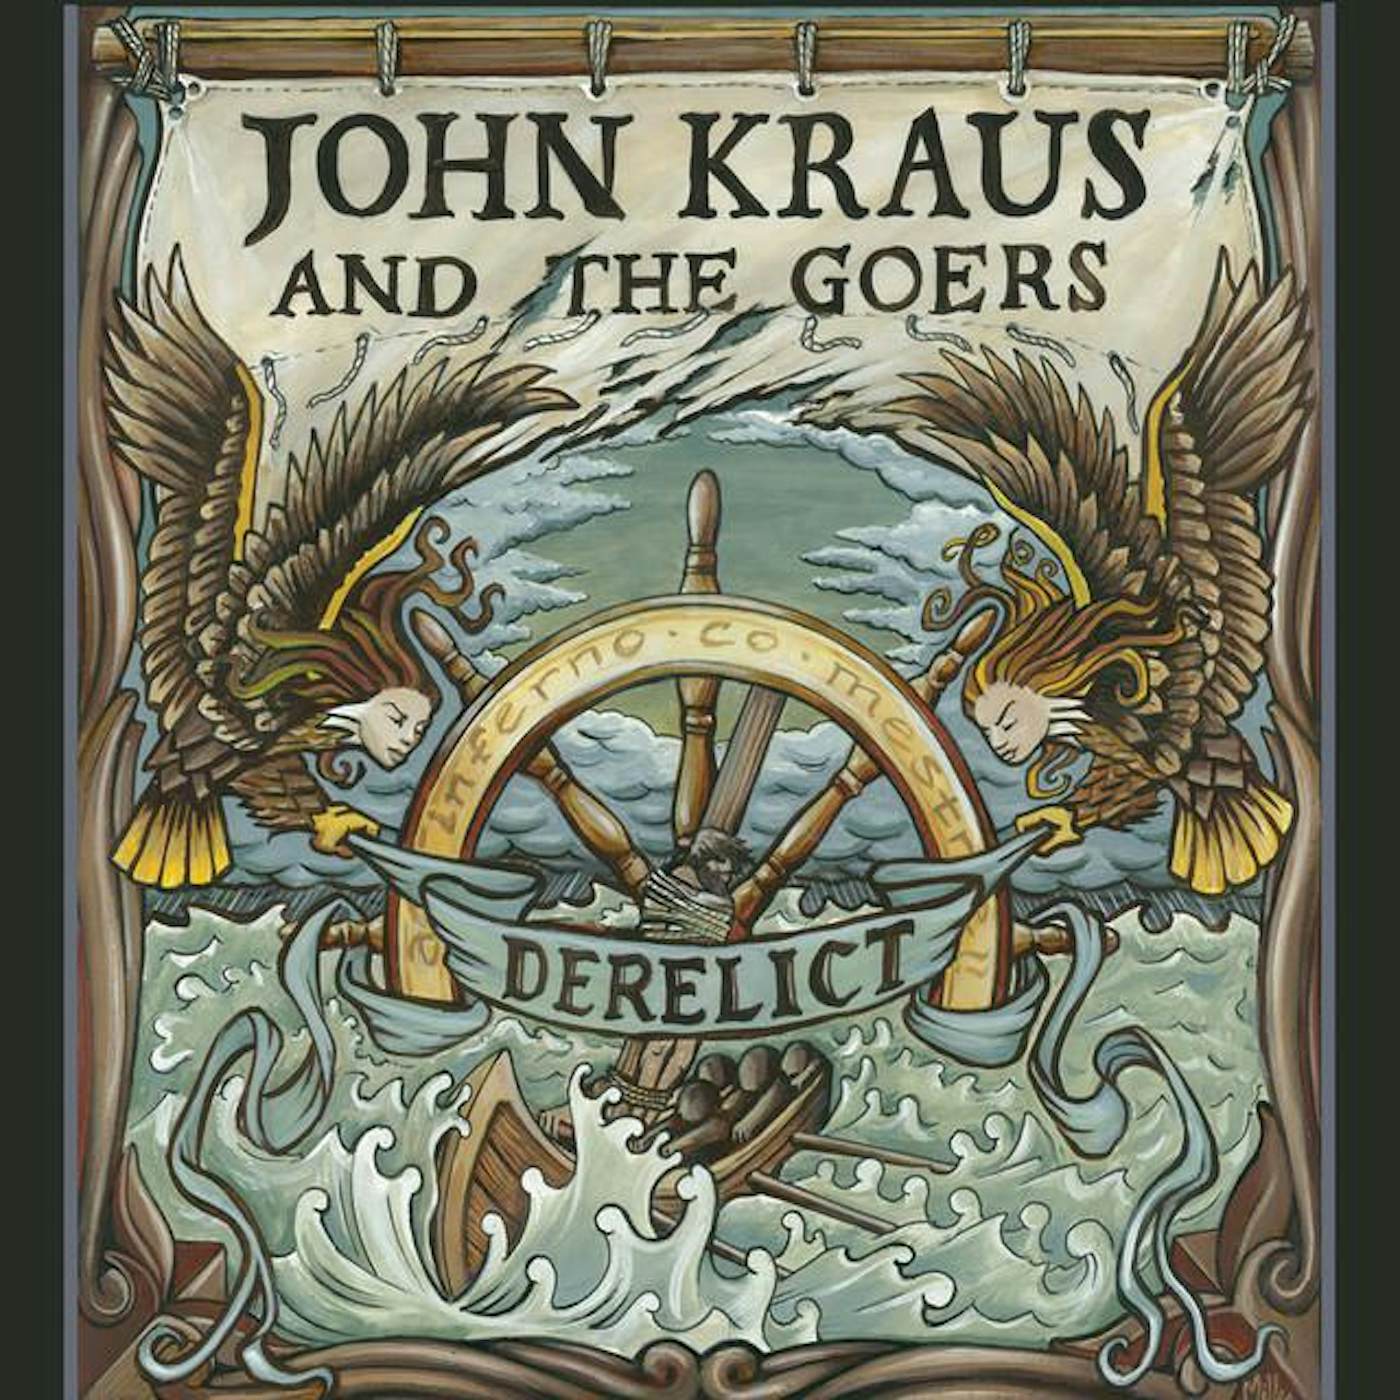 John Kraus and the Goers